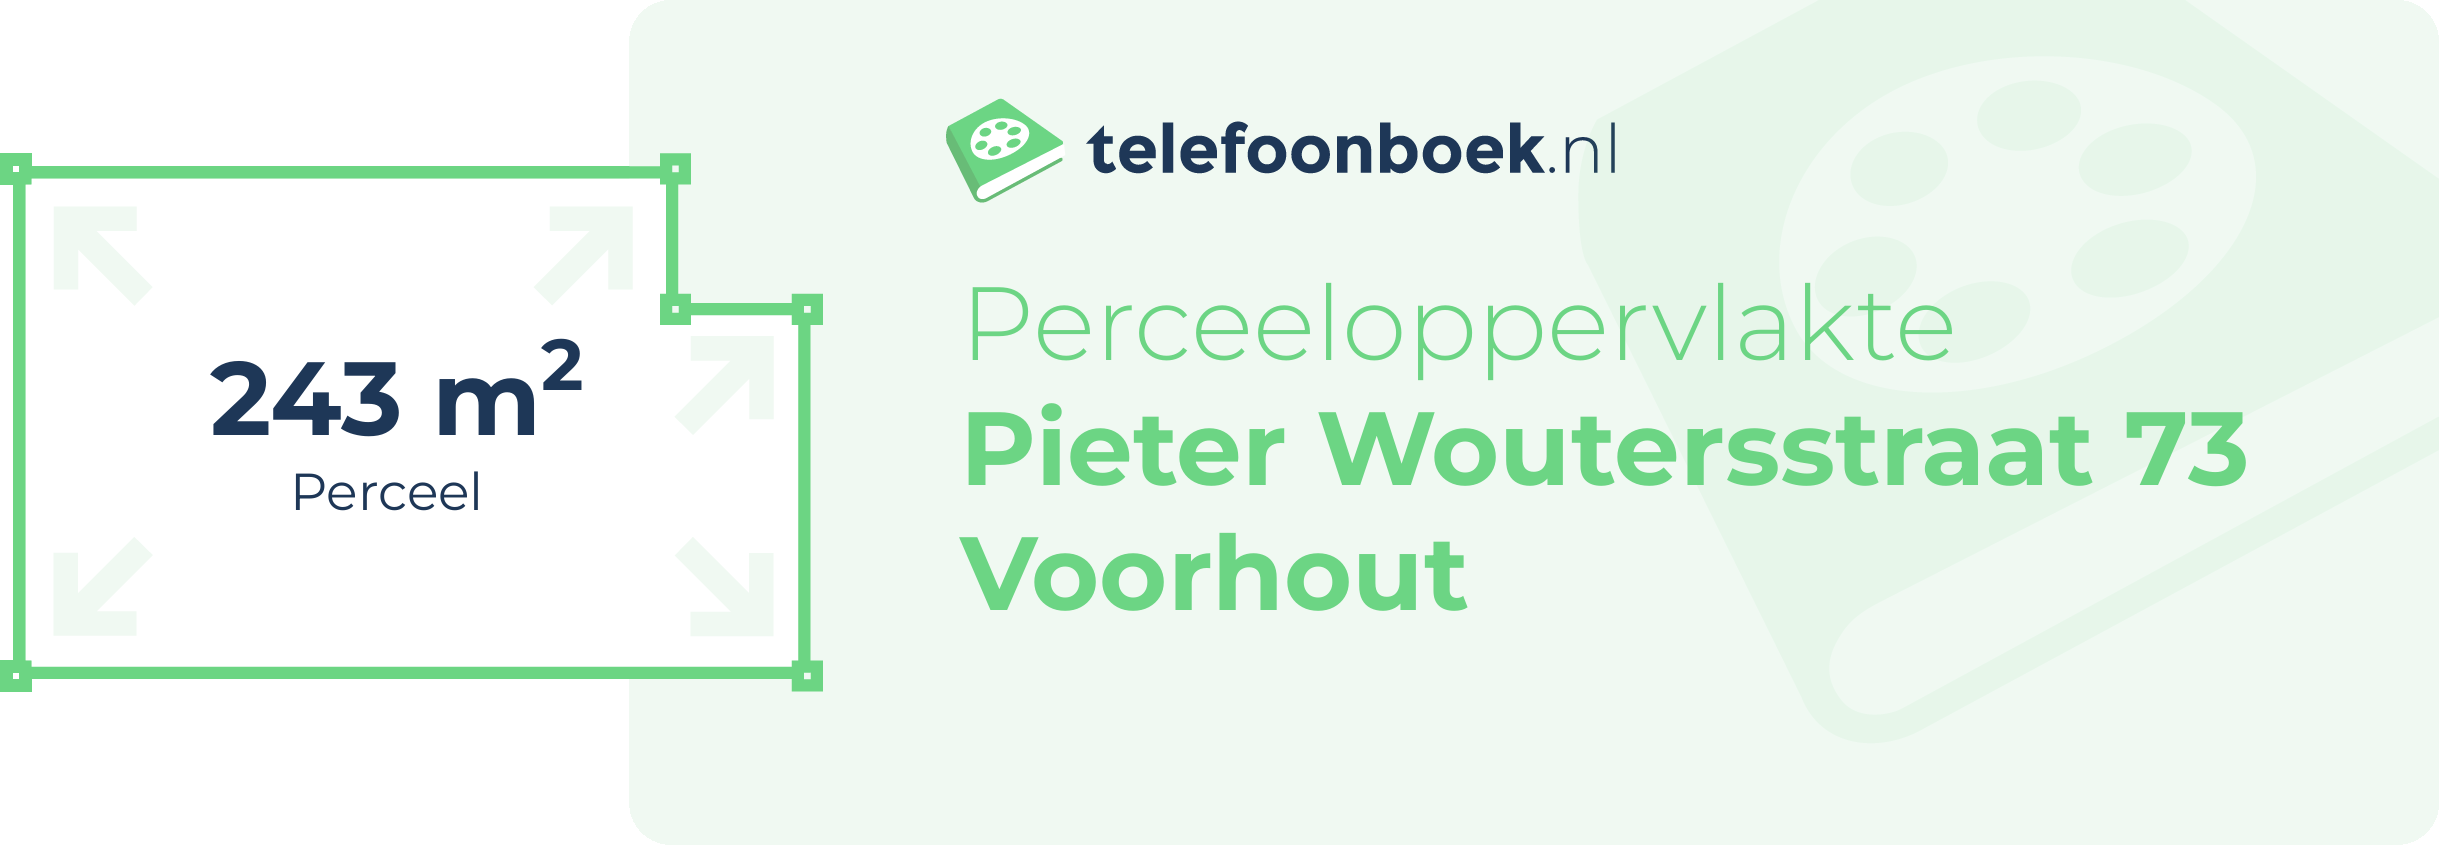 Perceeloppervlakte Pieter Woutersstraat 73 Voorhout